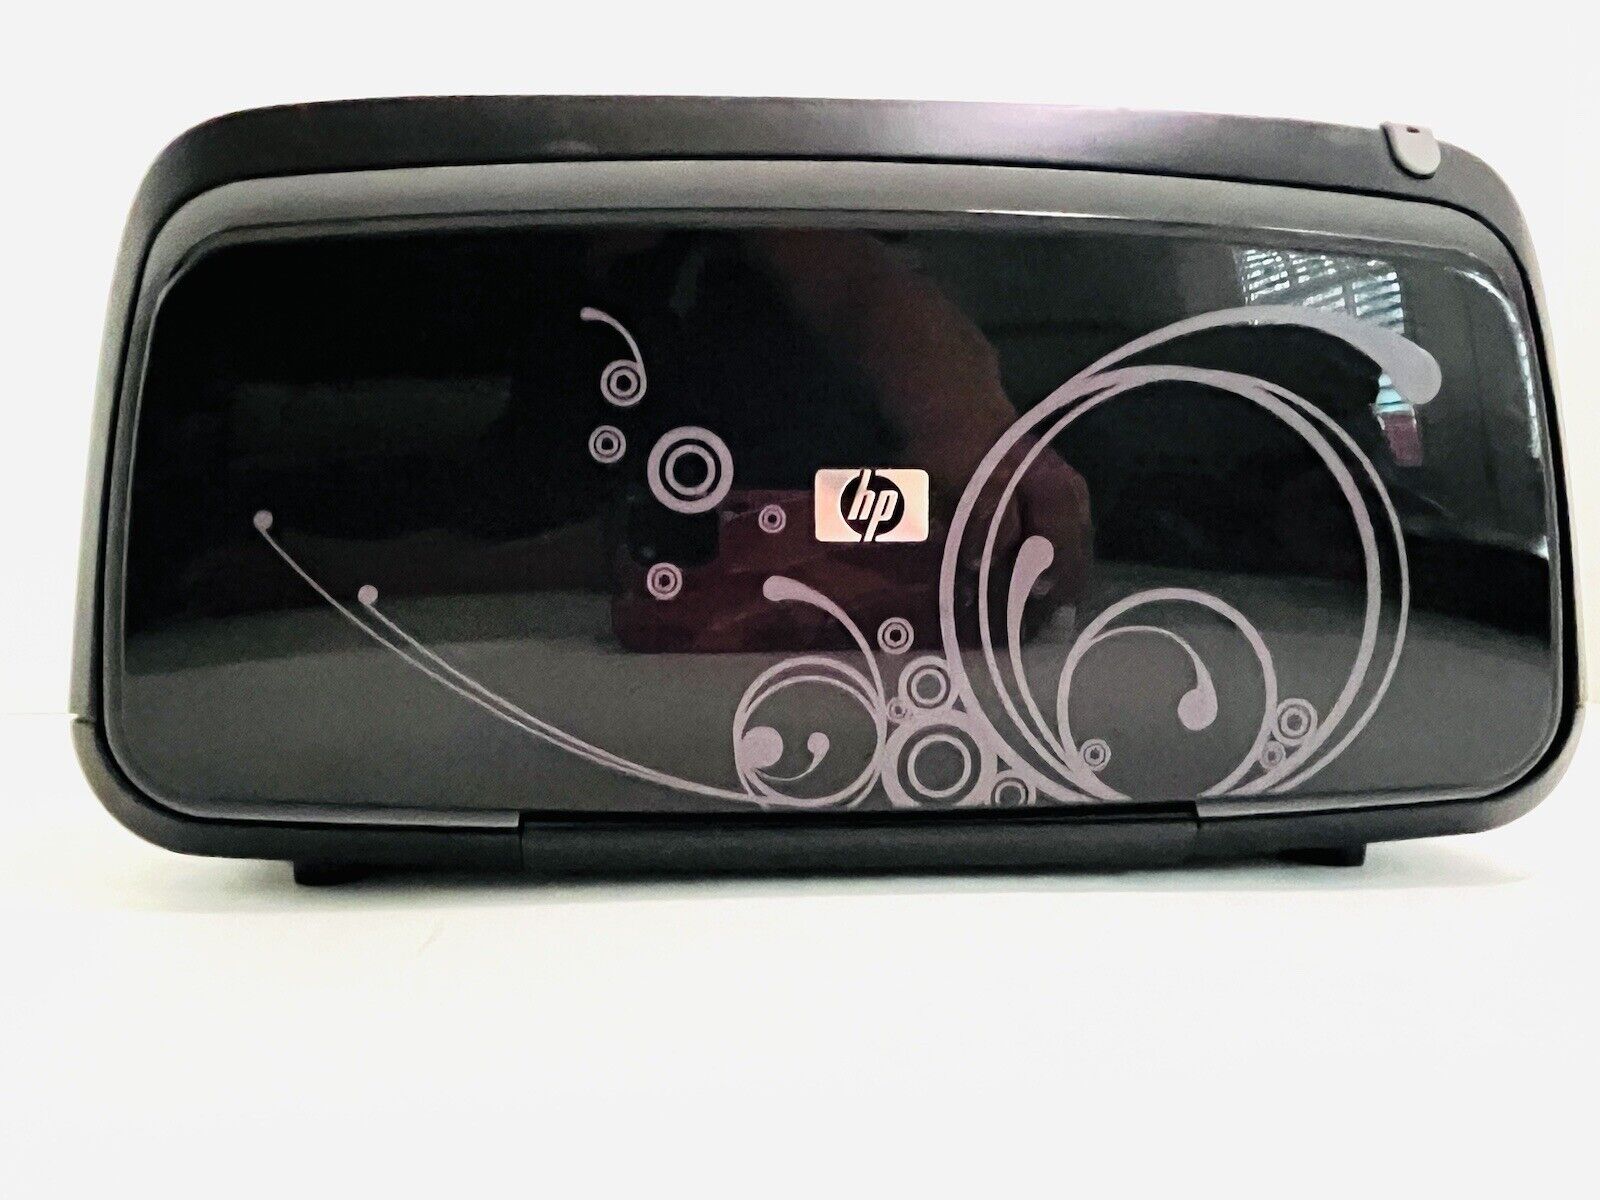 HP Photosmart A646 Digital Photo Inkjet Bluetooth Printer Touch Smart & Carrying